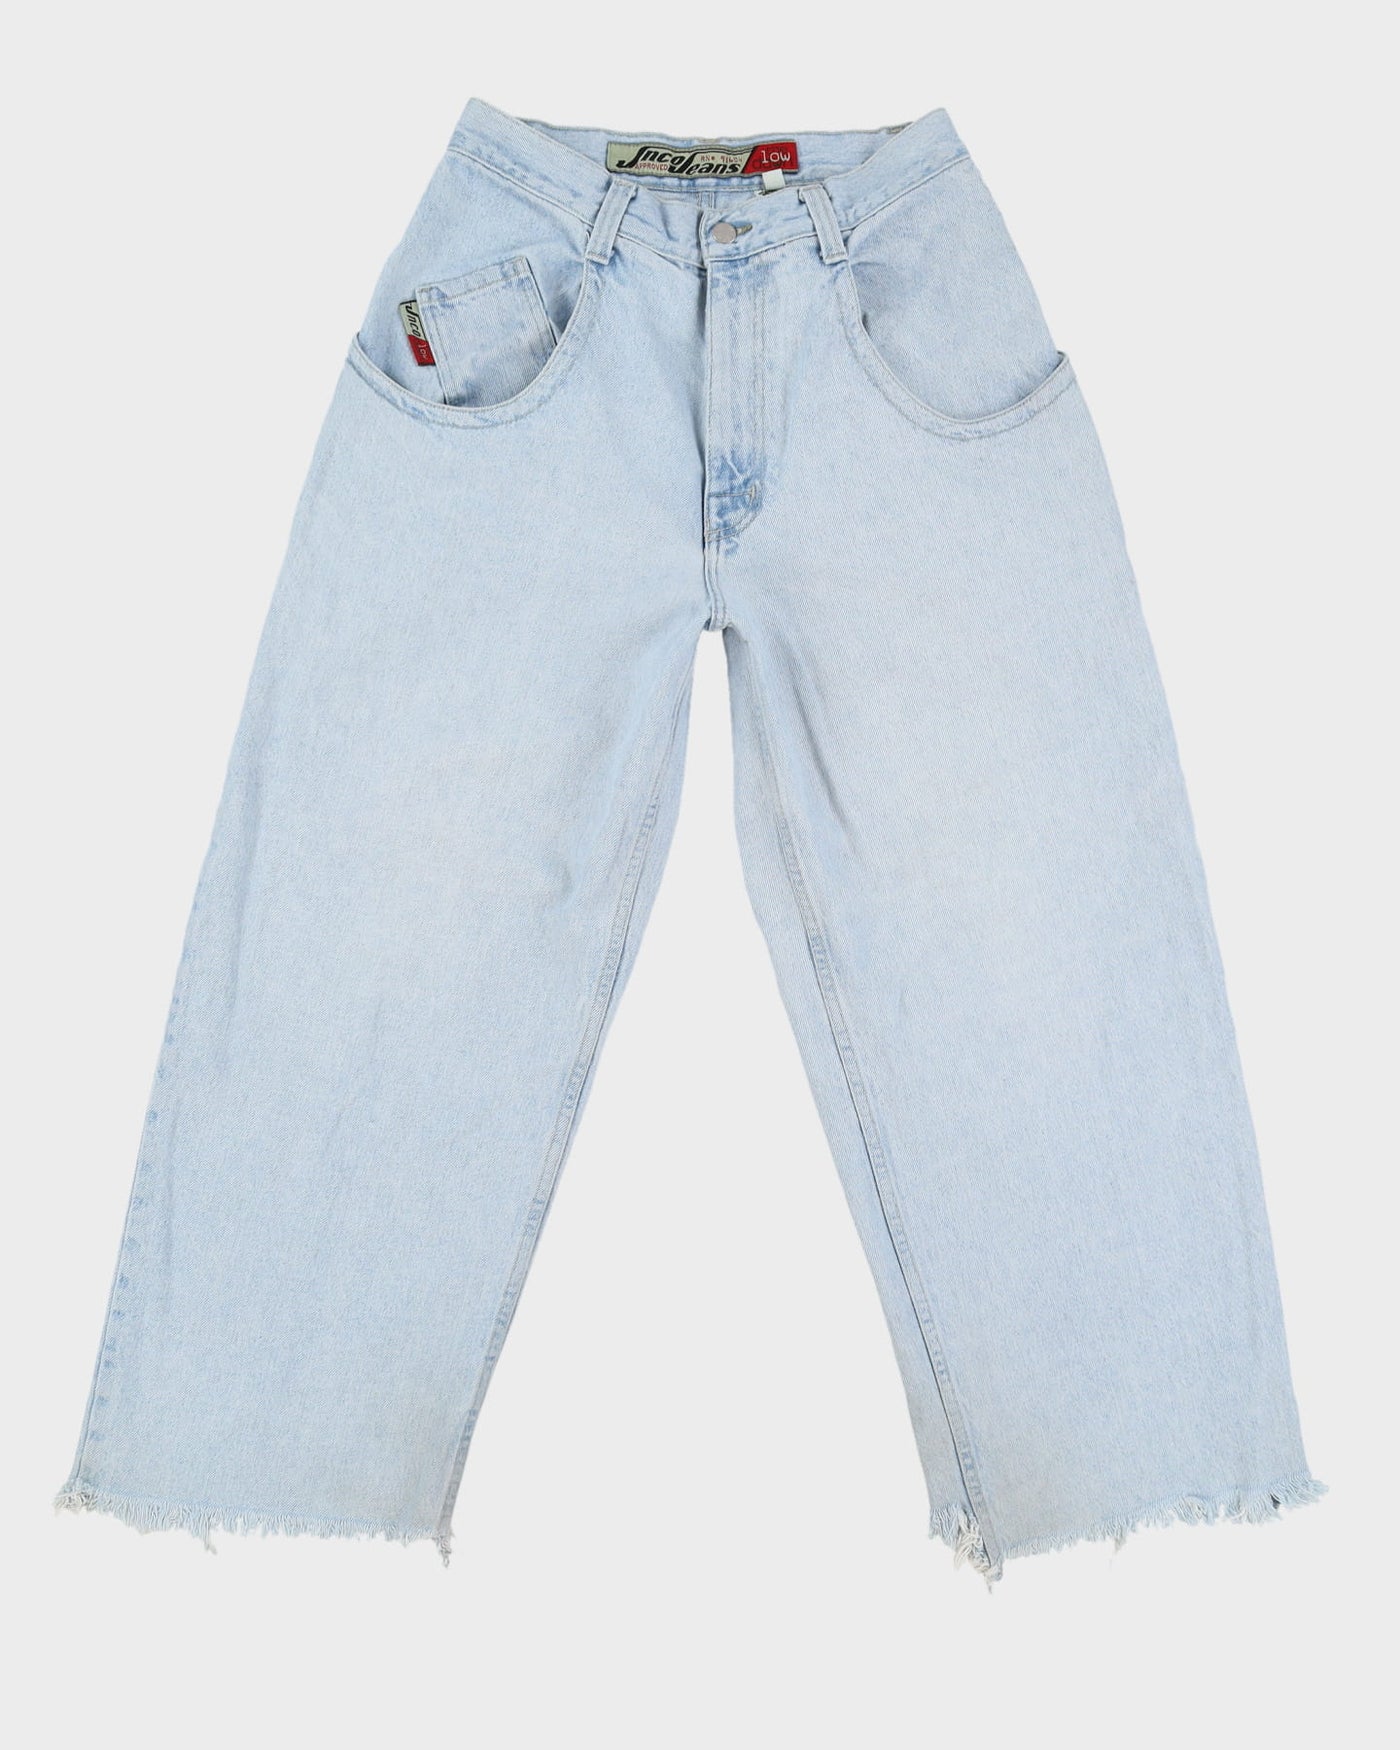 90s / 00s Y2K JNCO Light Wash Blue Jeans - W30 L27